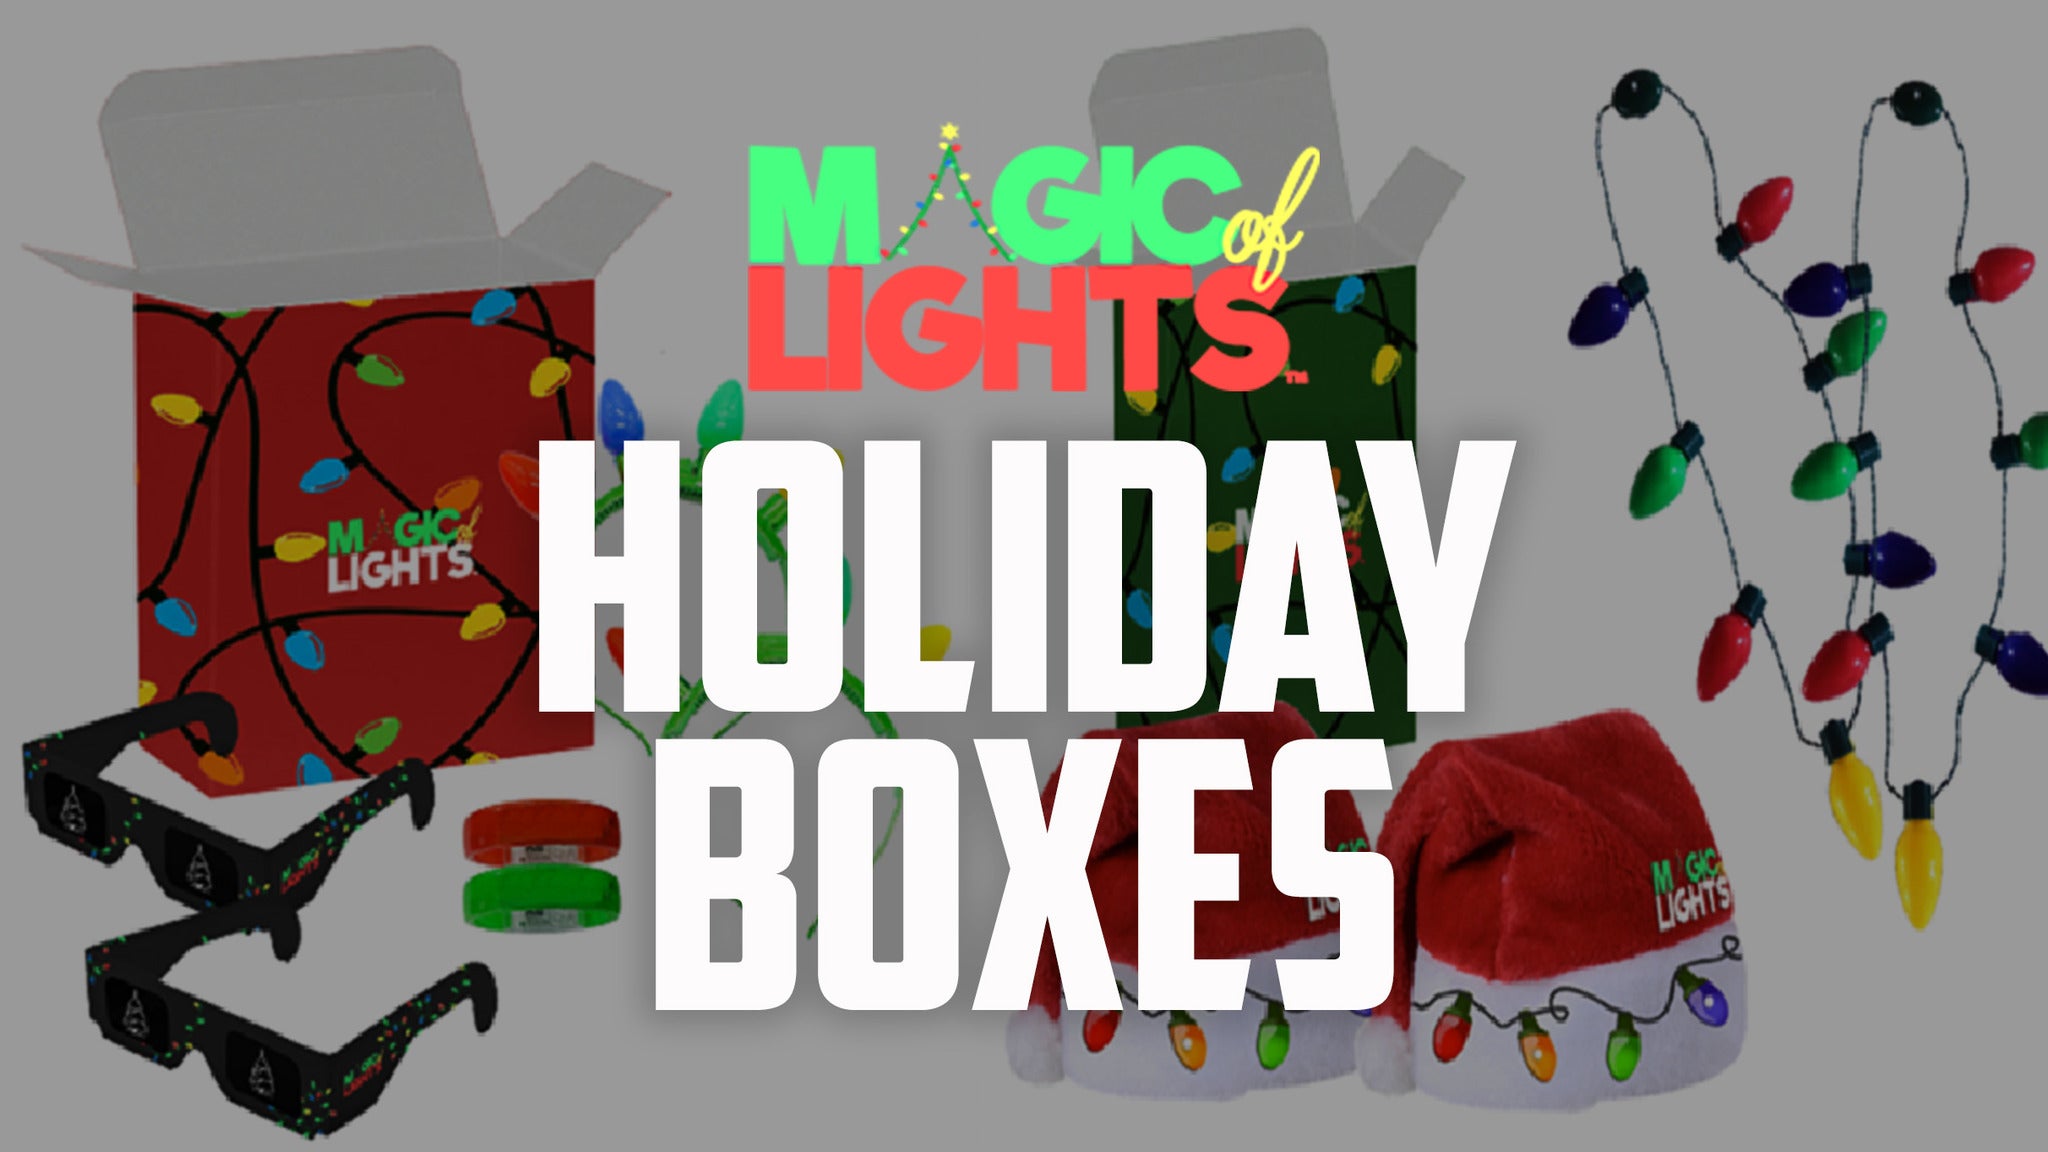 Magic Of Lights: HOLIDAY BOXES presale information on freepresalepasswords.com